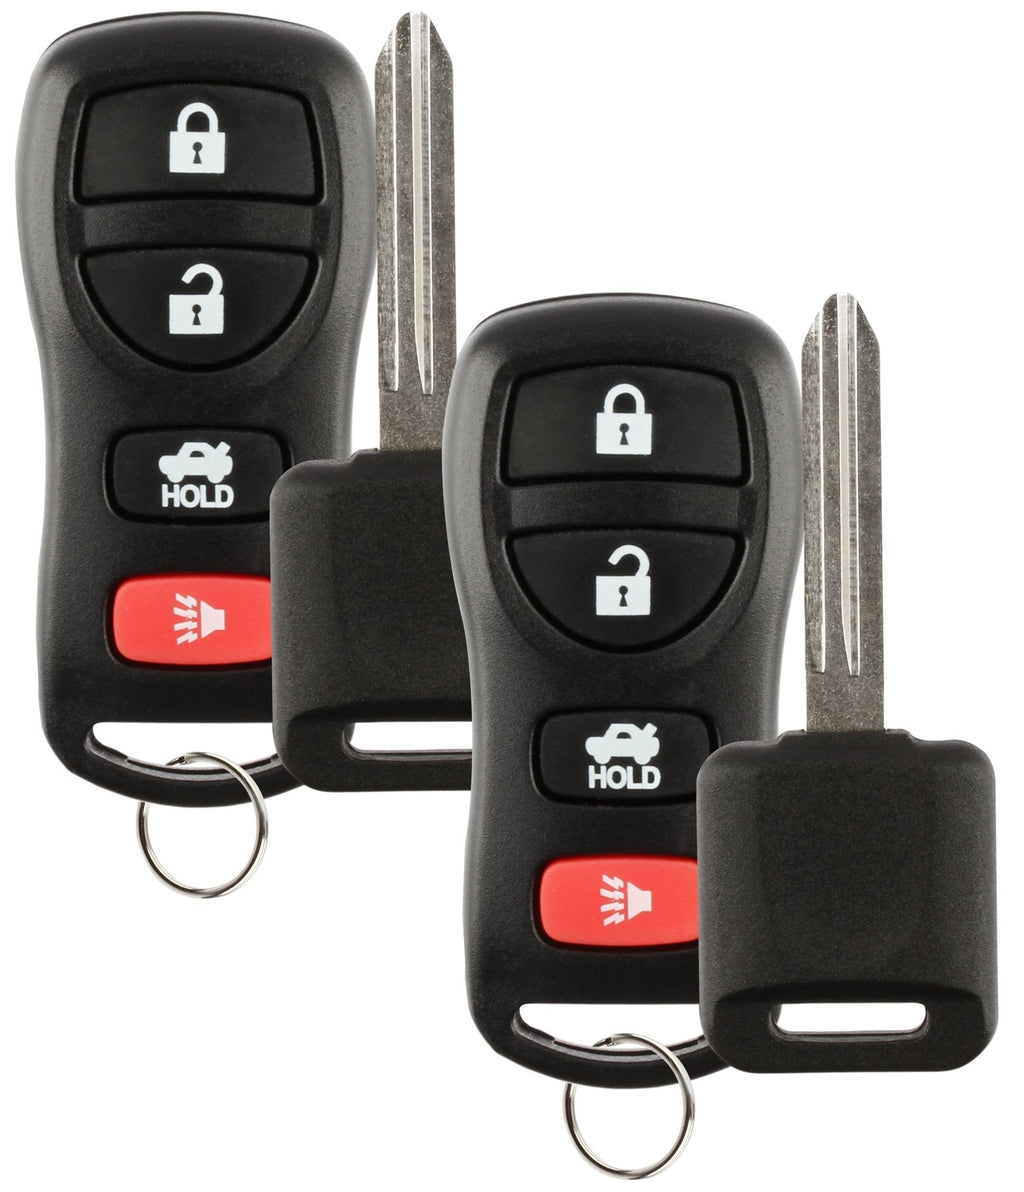  [AUSTRALIA] - Discount Keyless Replacement Key Fob Car Remote and Uncut Transponder Key Compatible with KBRASTU15, CWTWB1U758, ID 46 (2 Pack) Remote w/Key 2 Sets